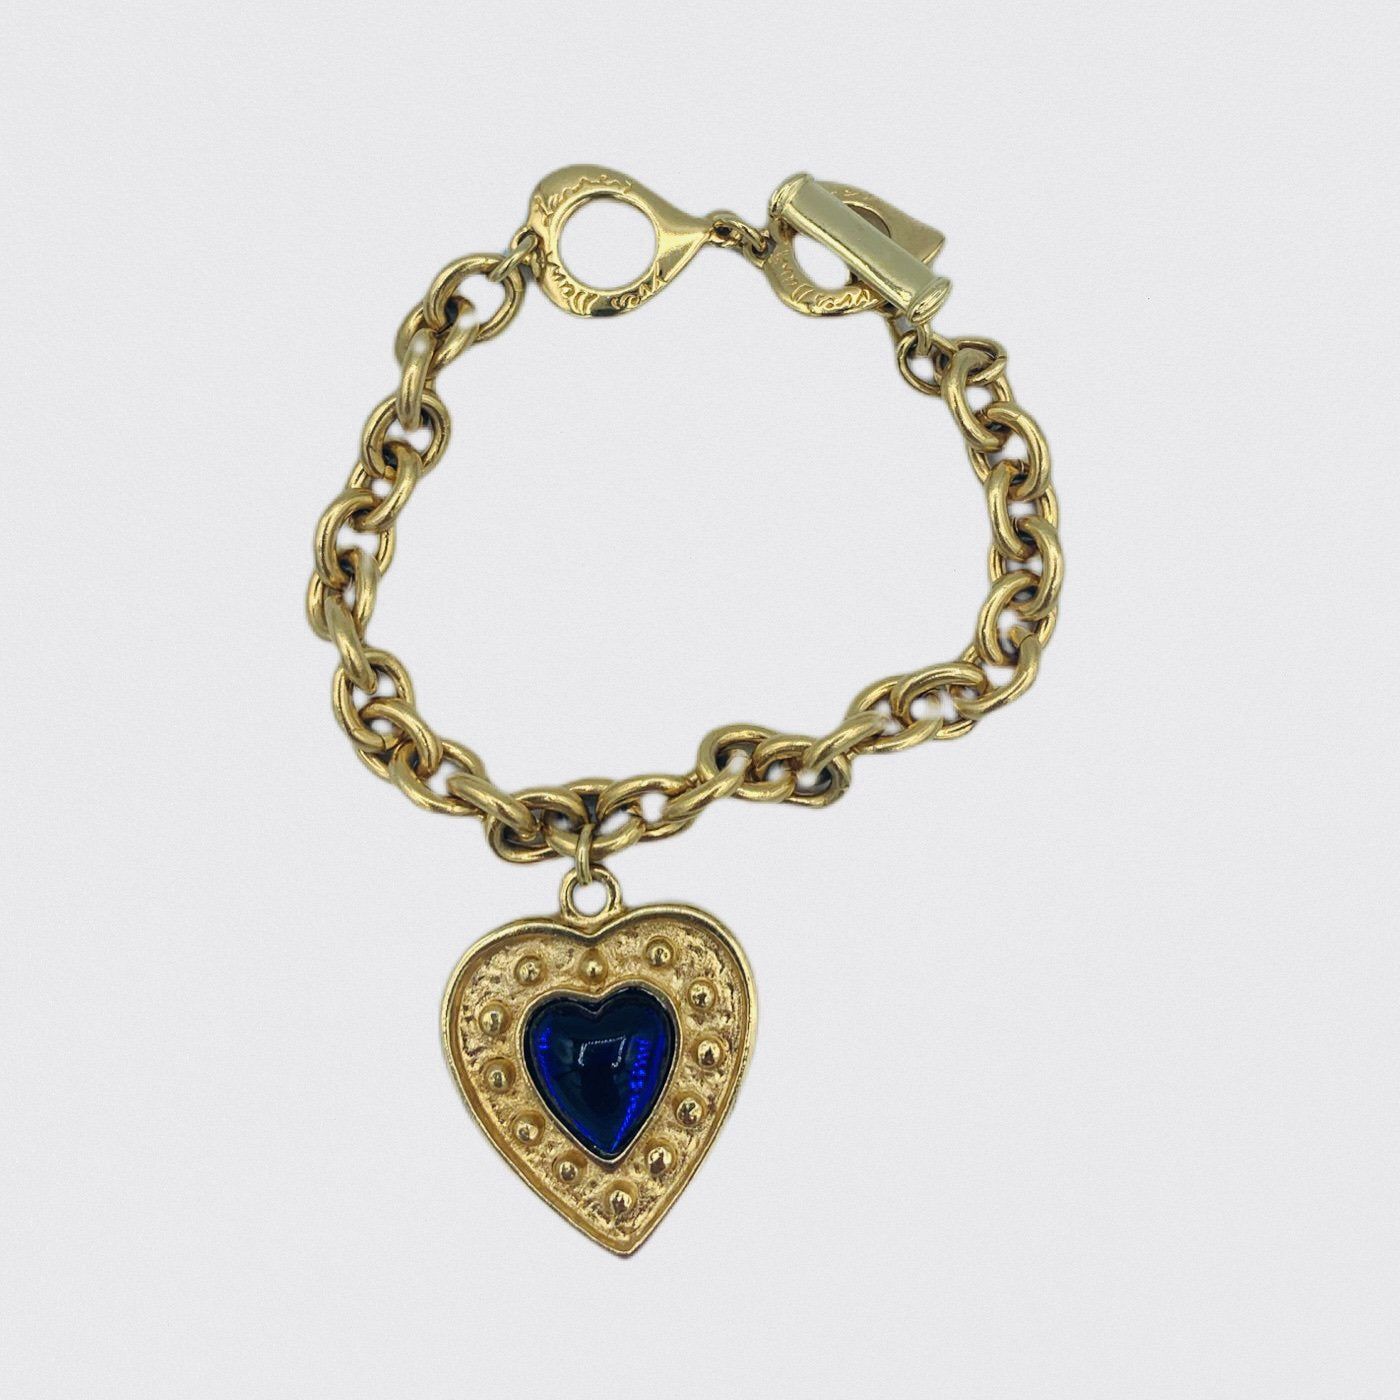 Lysis vintage Yves Saint Laurent vintage bracelet - 1990s